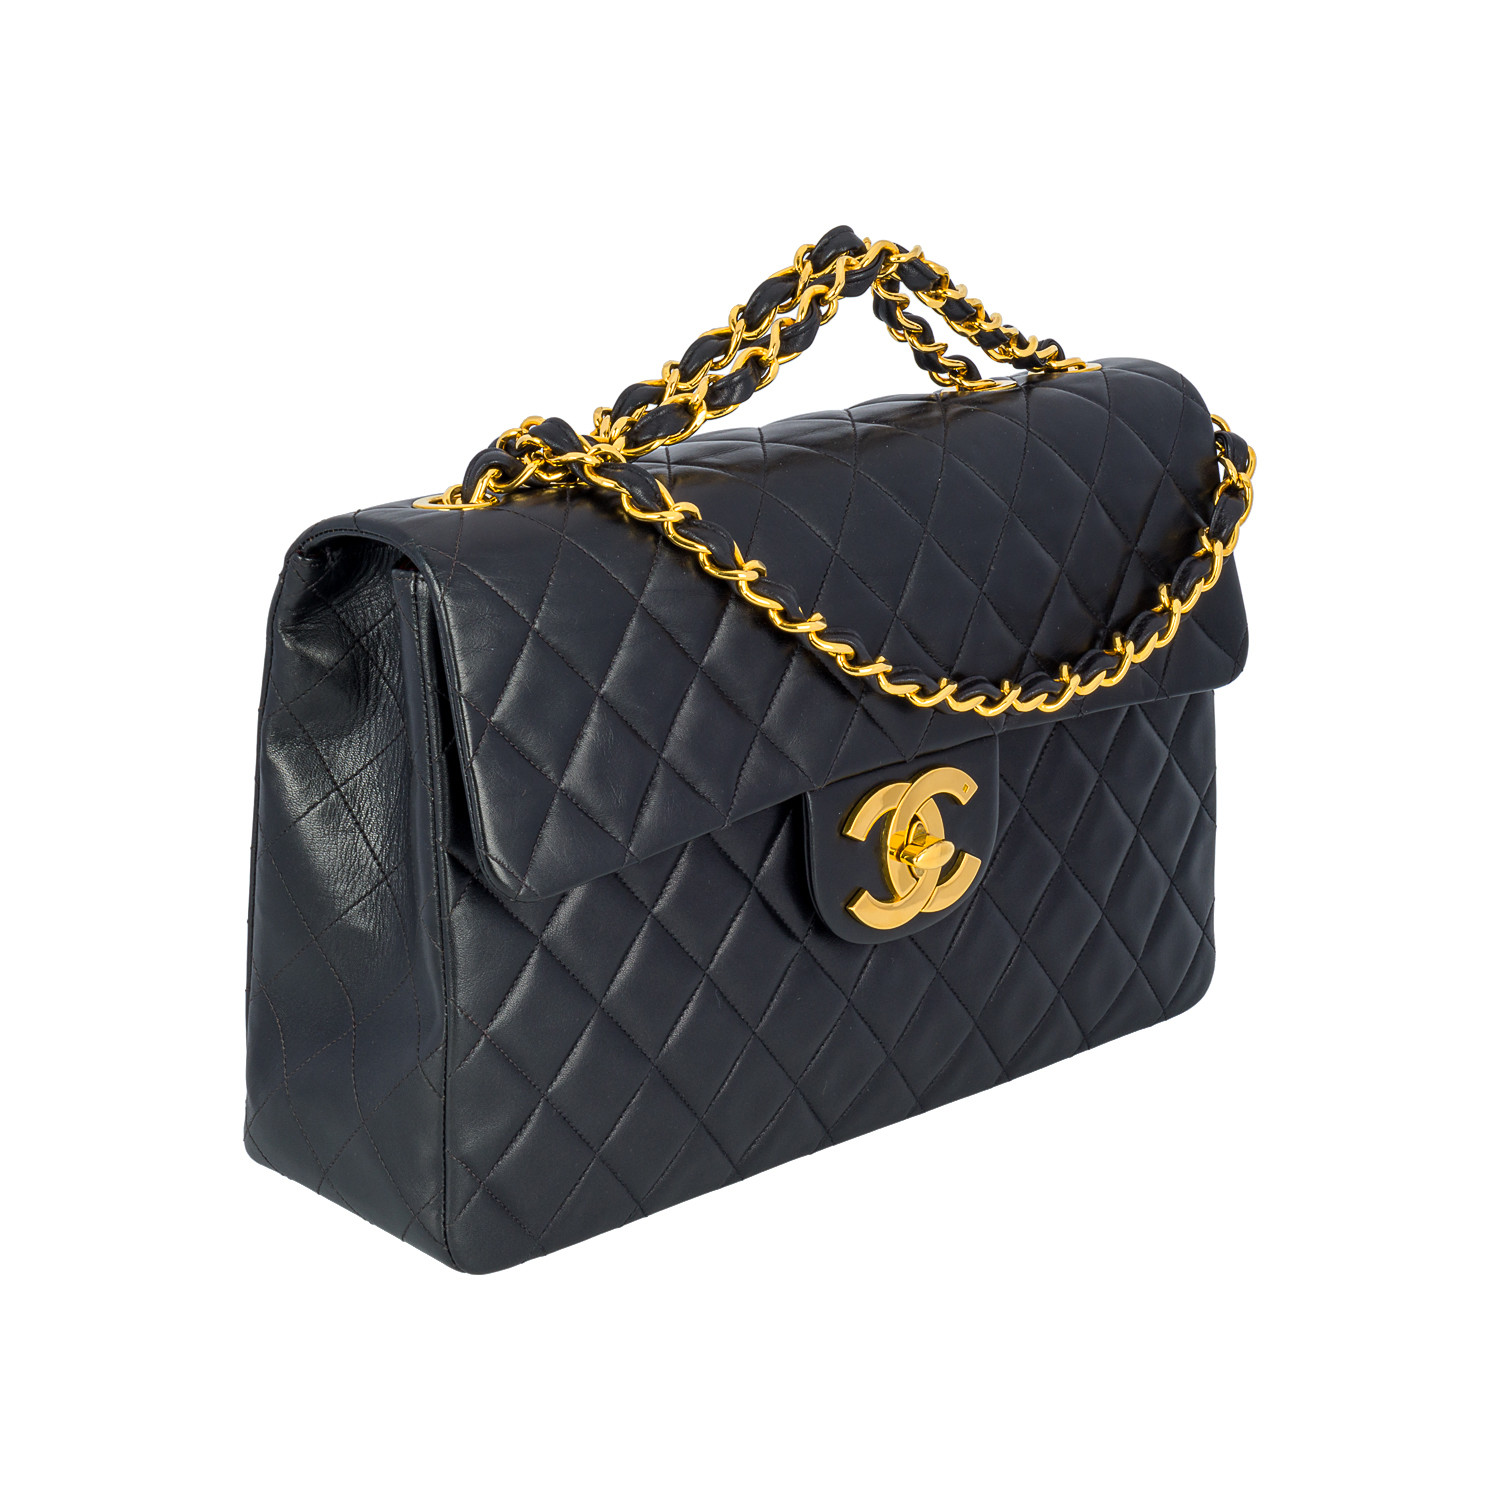 Chanel Classic Handbag Price History | IQS Executive